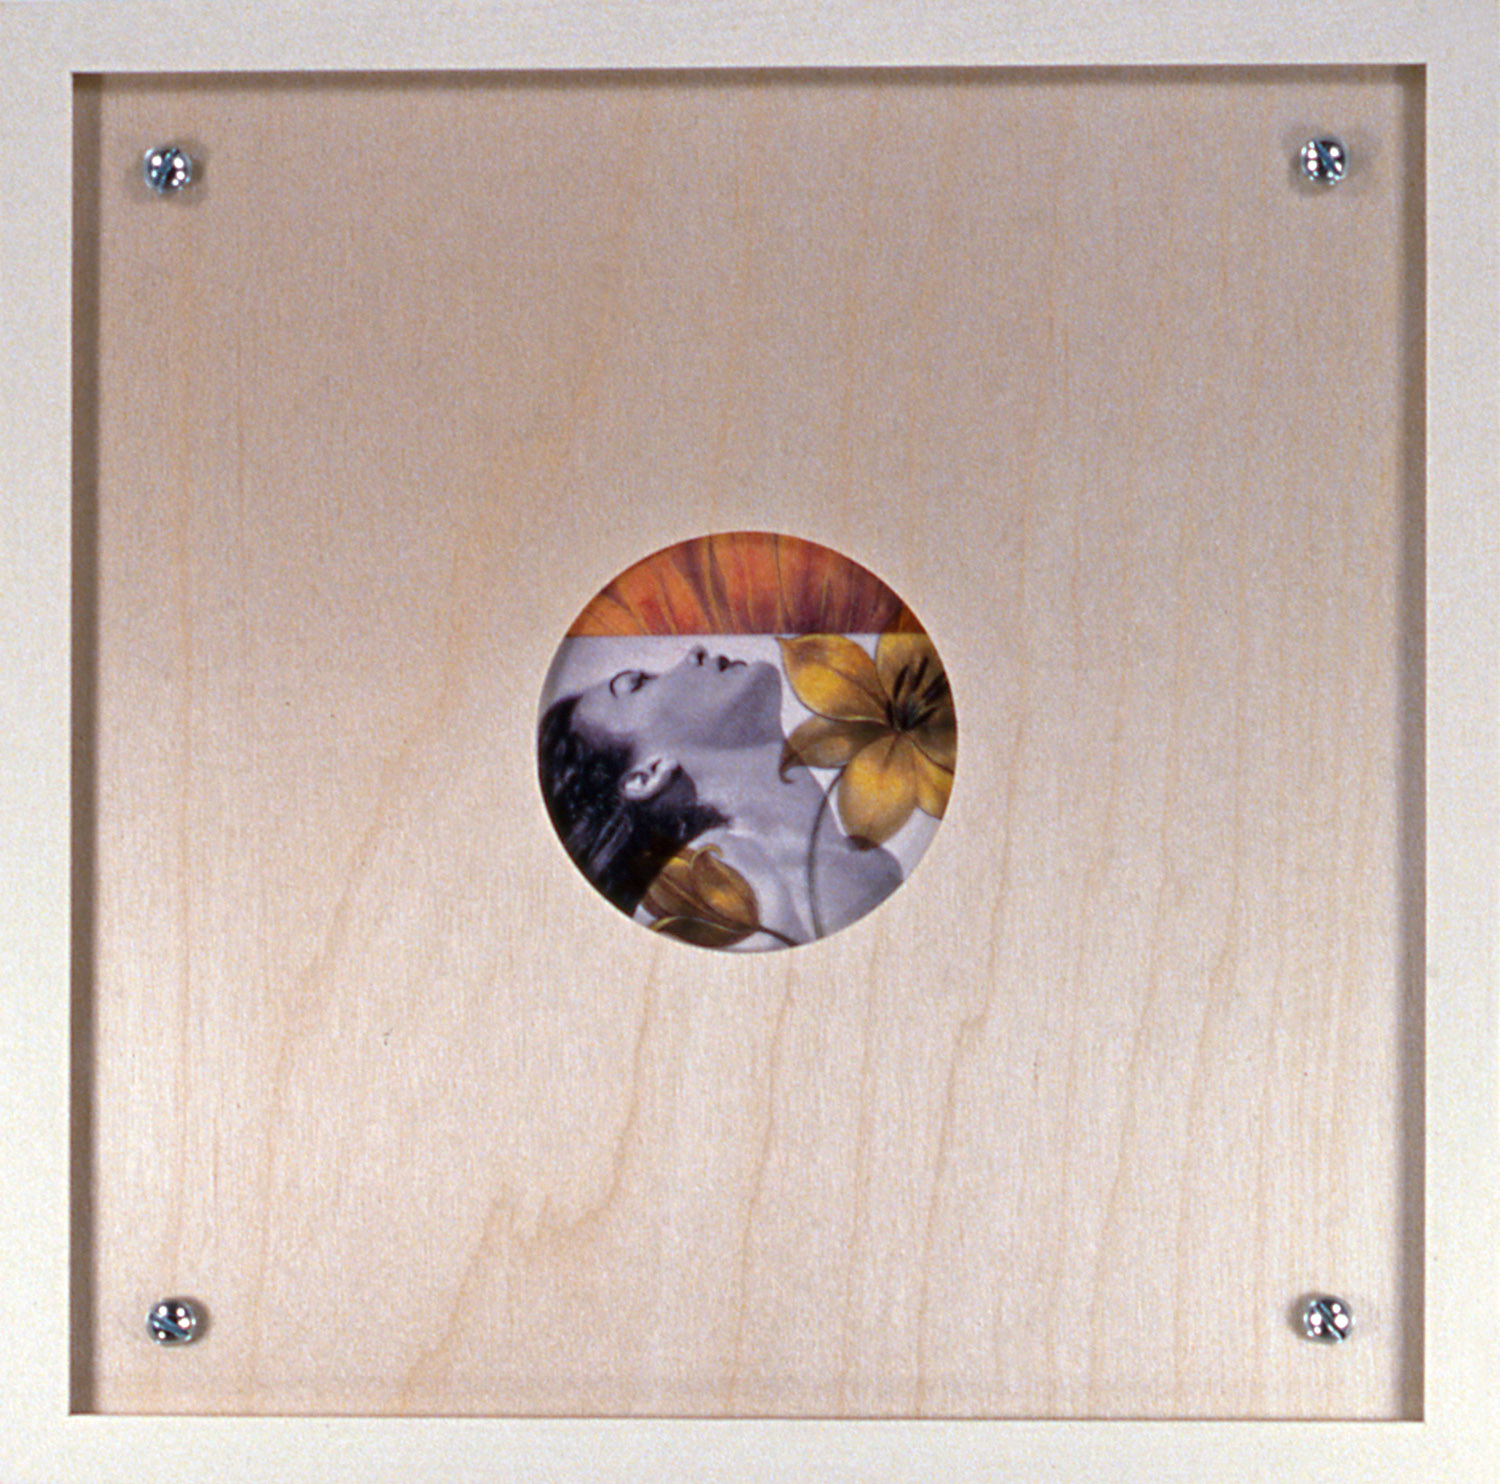   Peephole 6 , 1996, 10 1/2 x 10 1/2", mixed media with frame. 